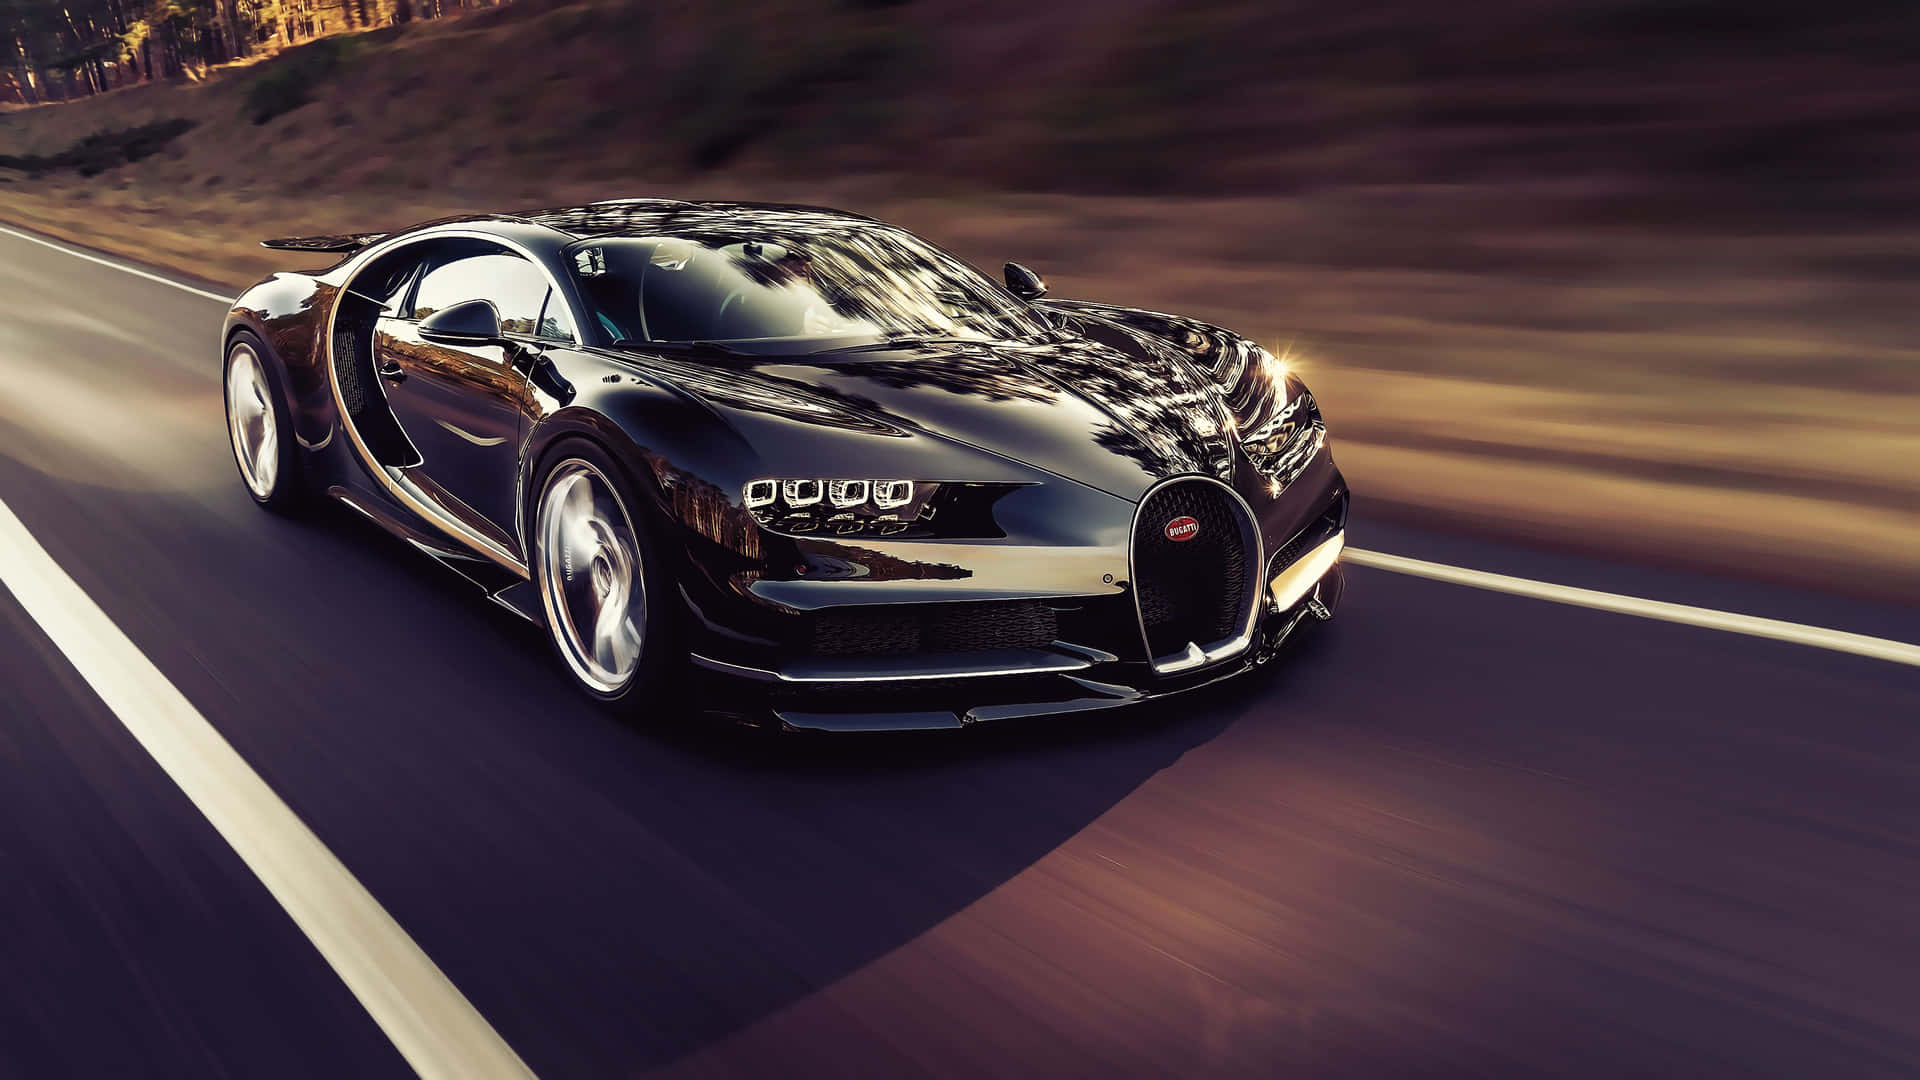 Bugatti Chiron Extravagant Driving Wallpaper